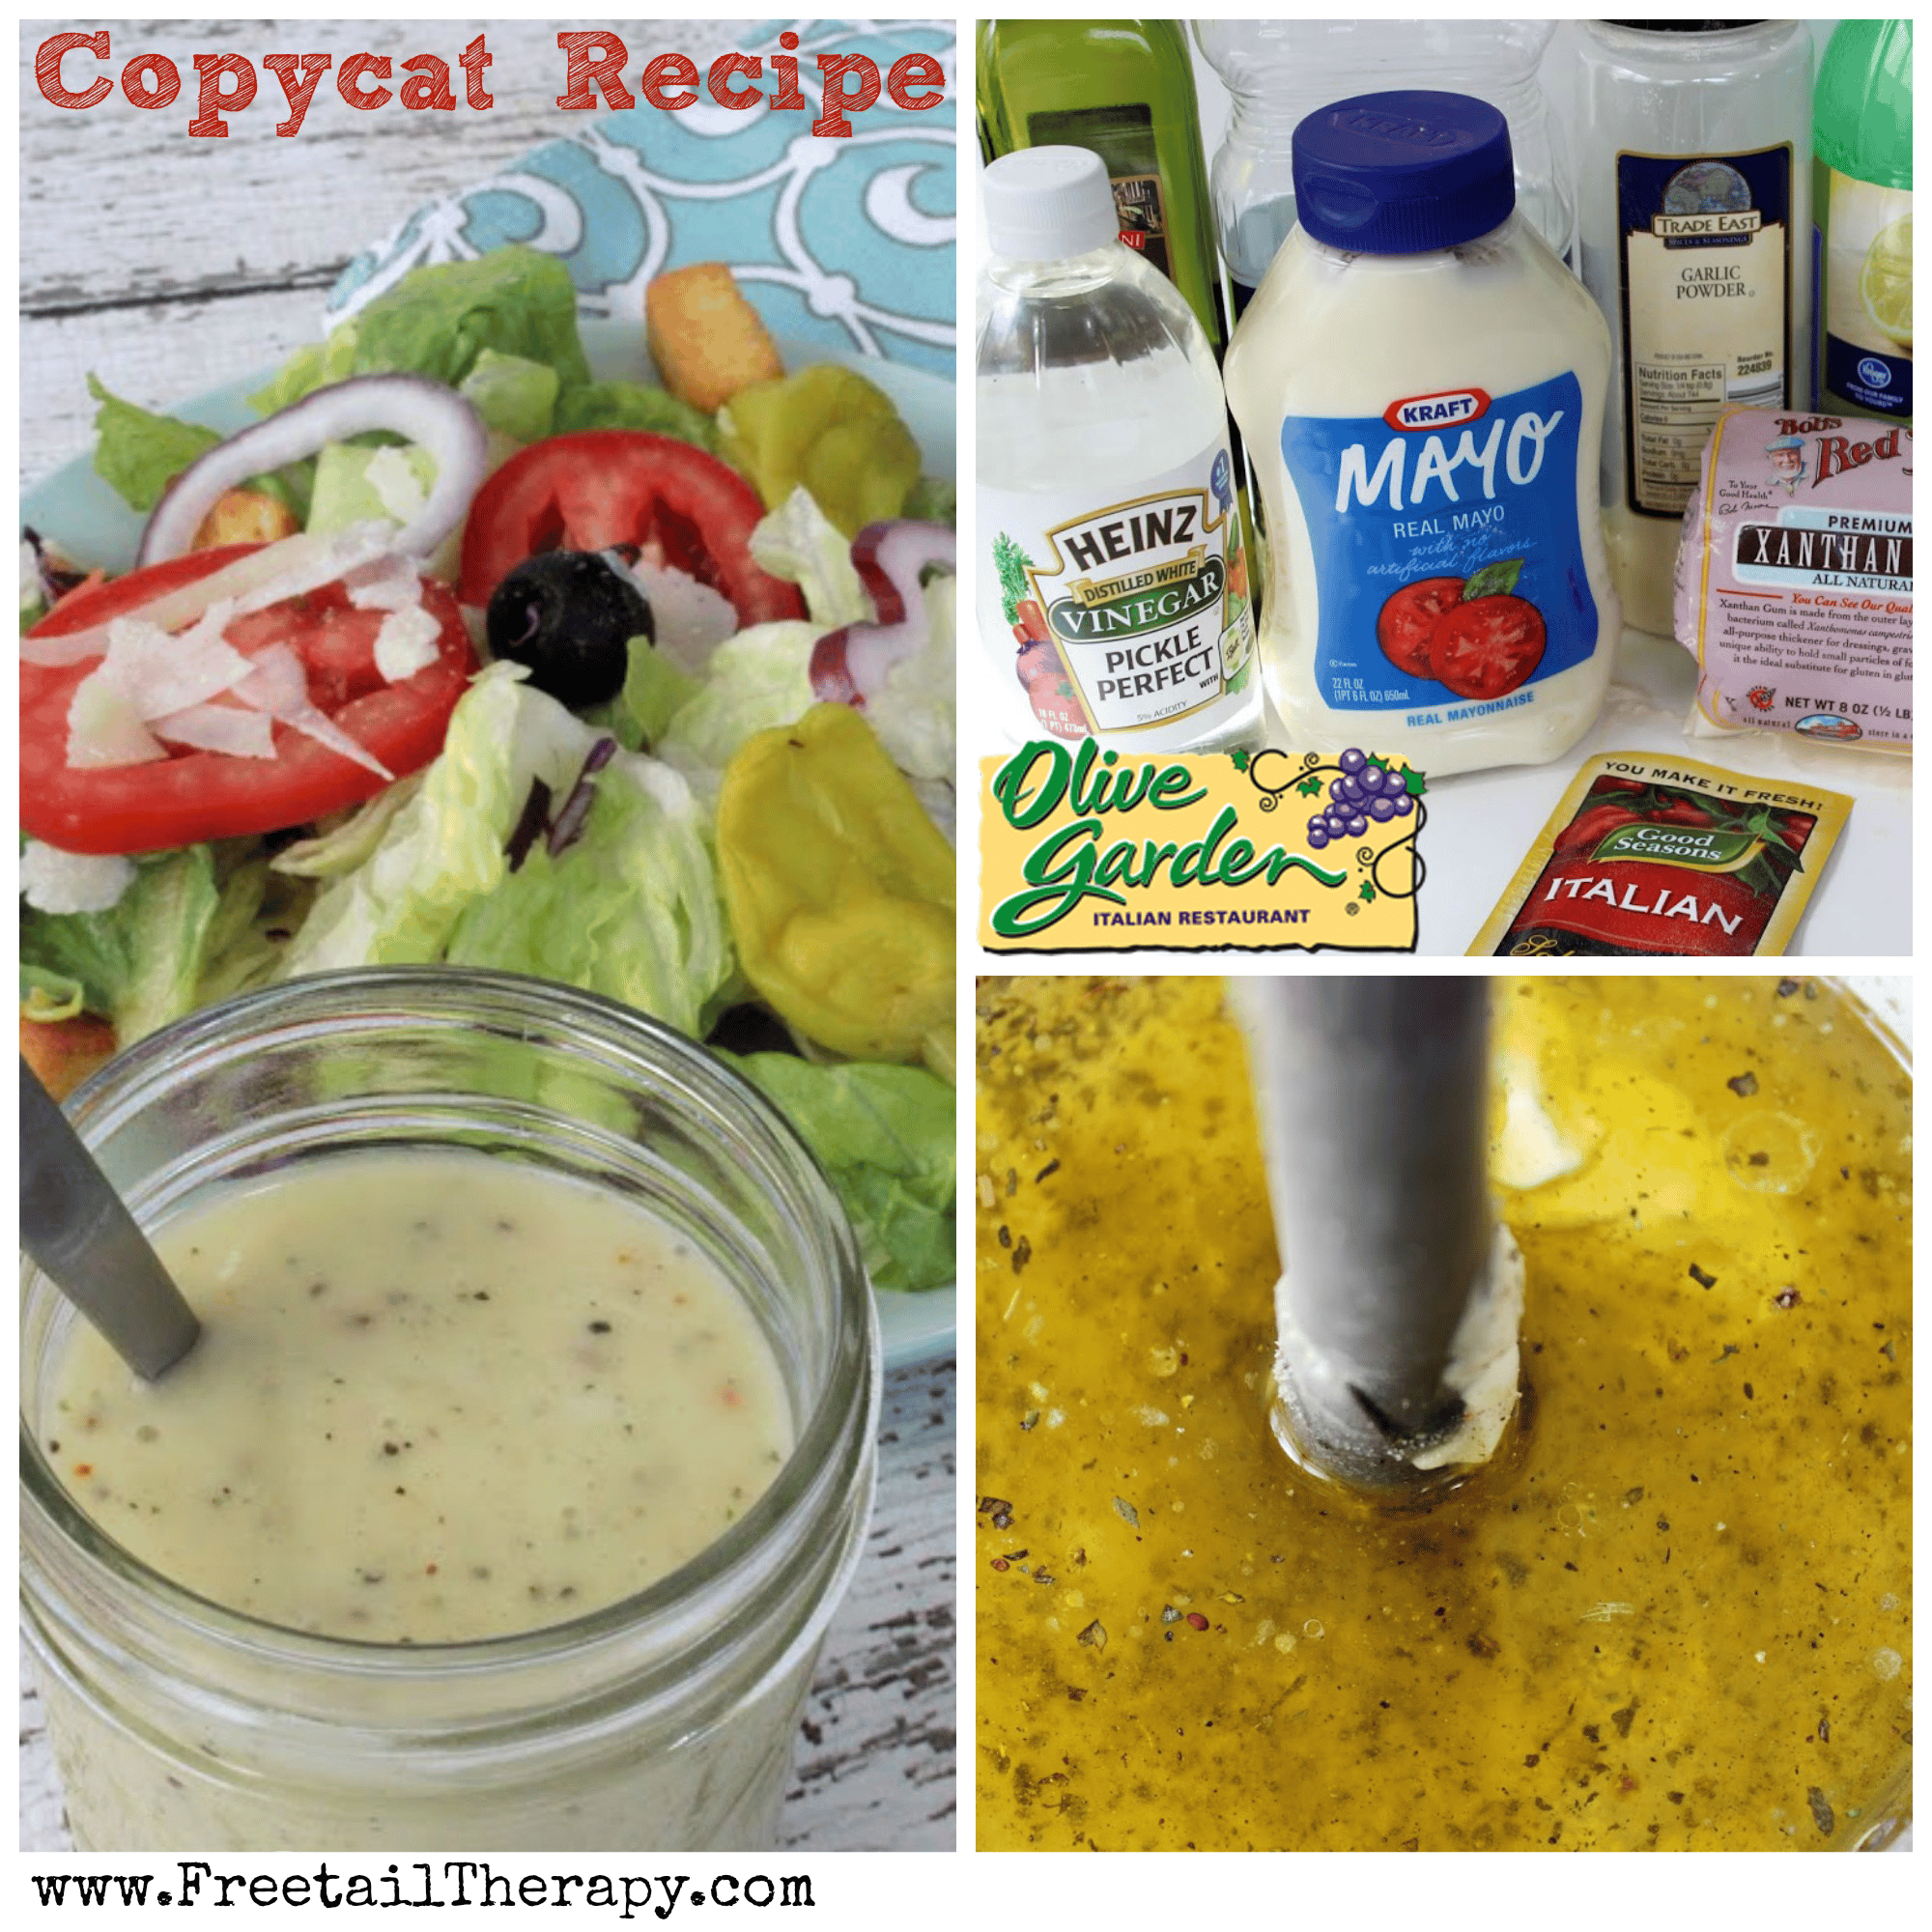 Copycat Olive Garden Salad Dressing Recipe